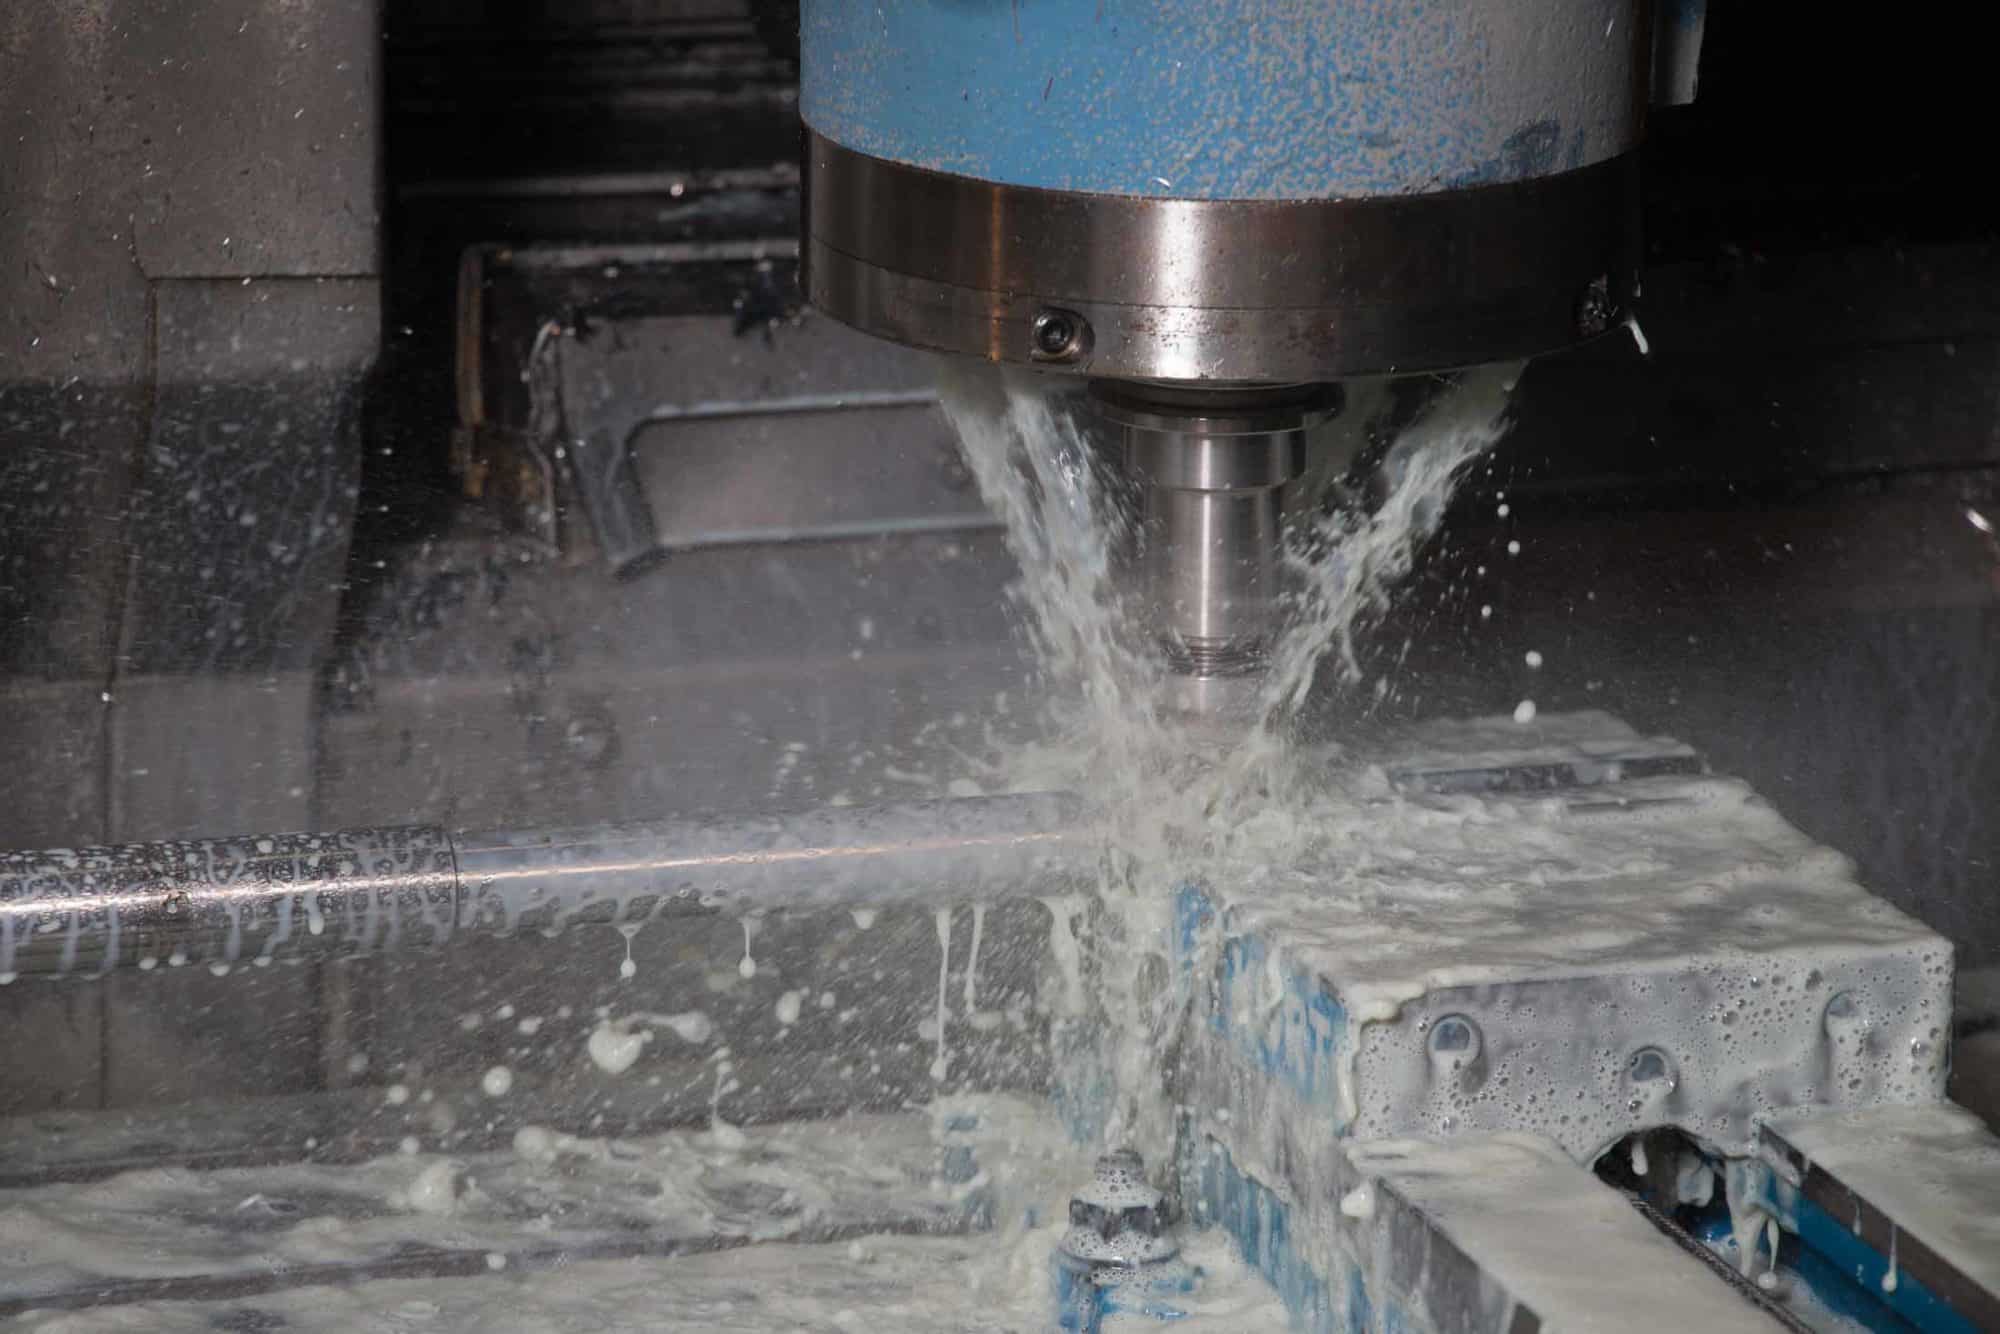 Titletown Manufacturing vertical milling machine